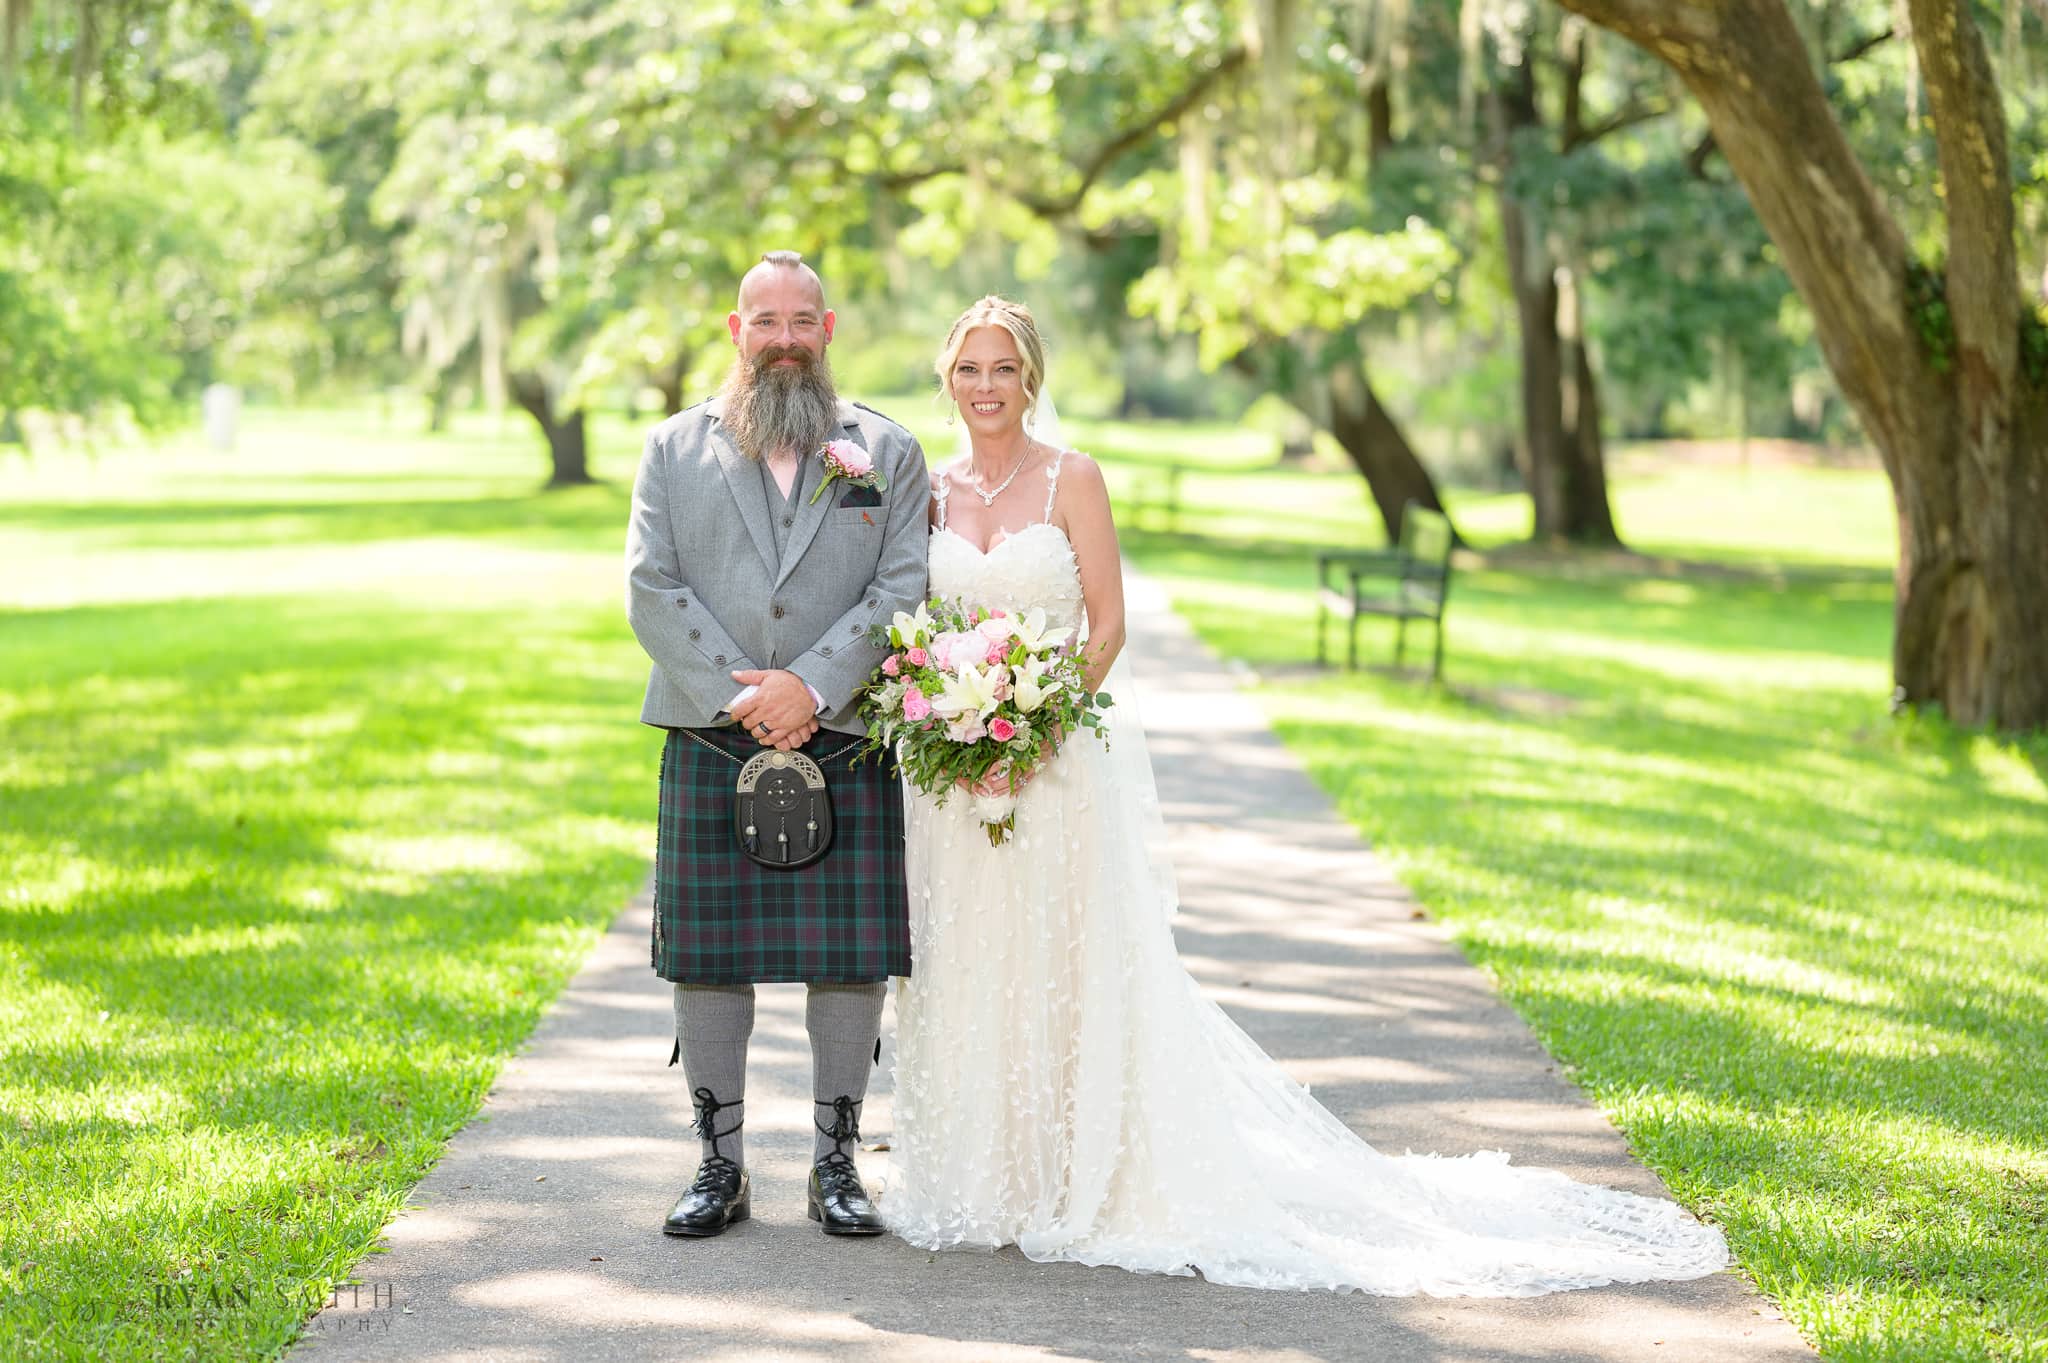 Bride with groom in Scottish kilt - Brookgreen Gardens